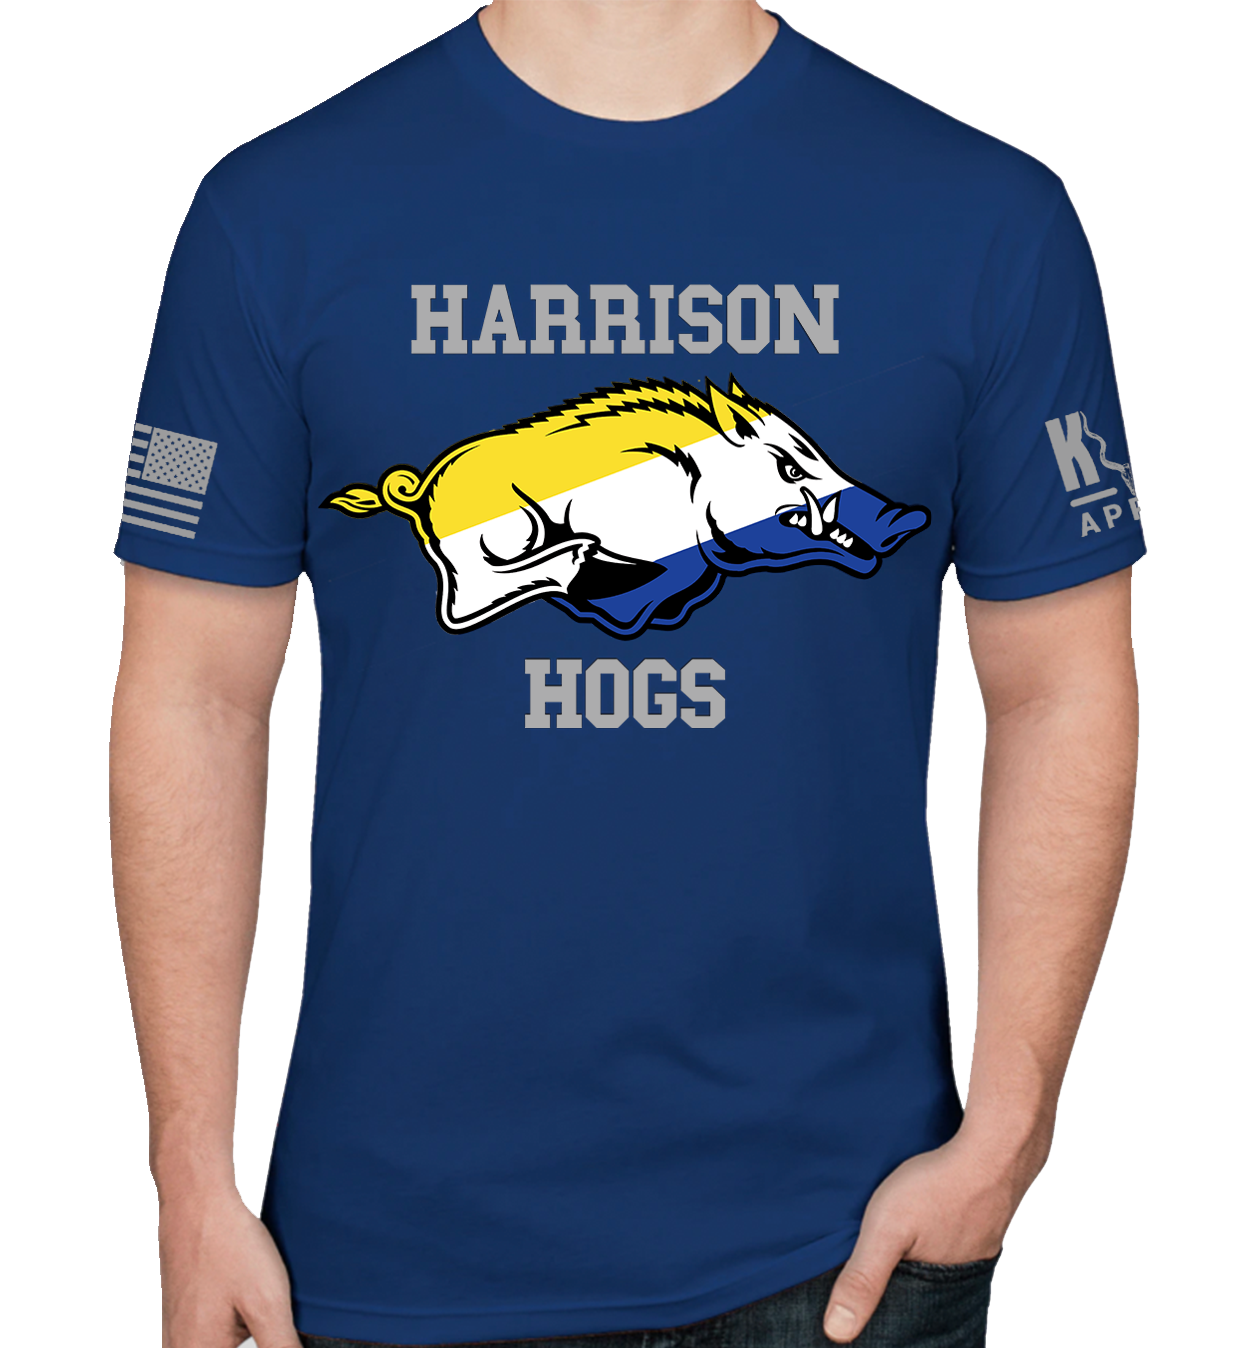 Harrison Hogs, Short Sleeve